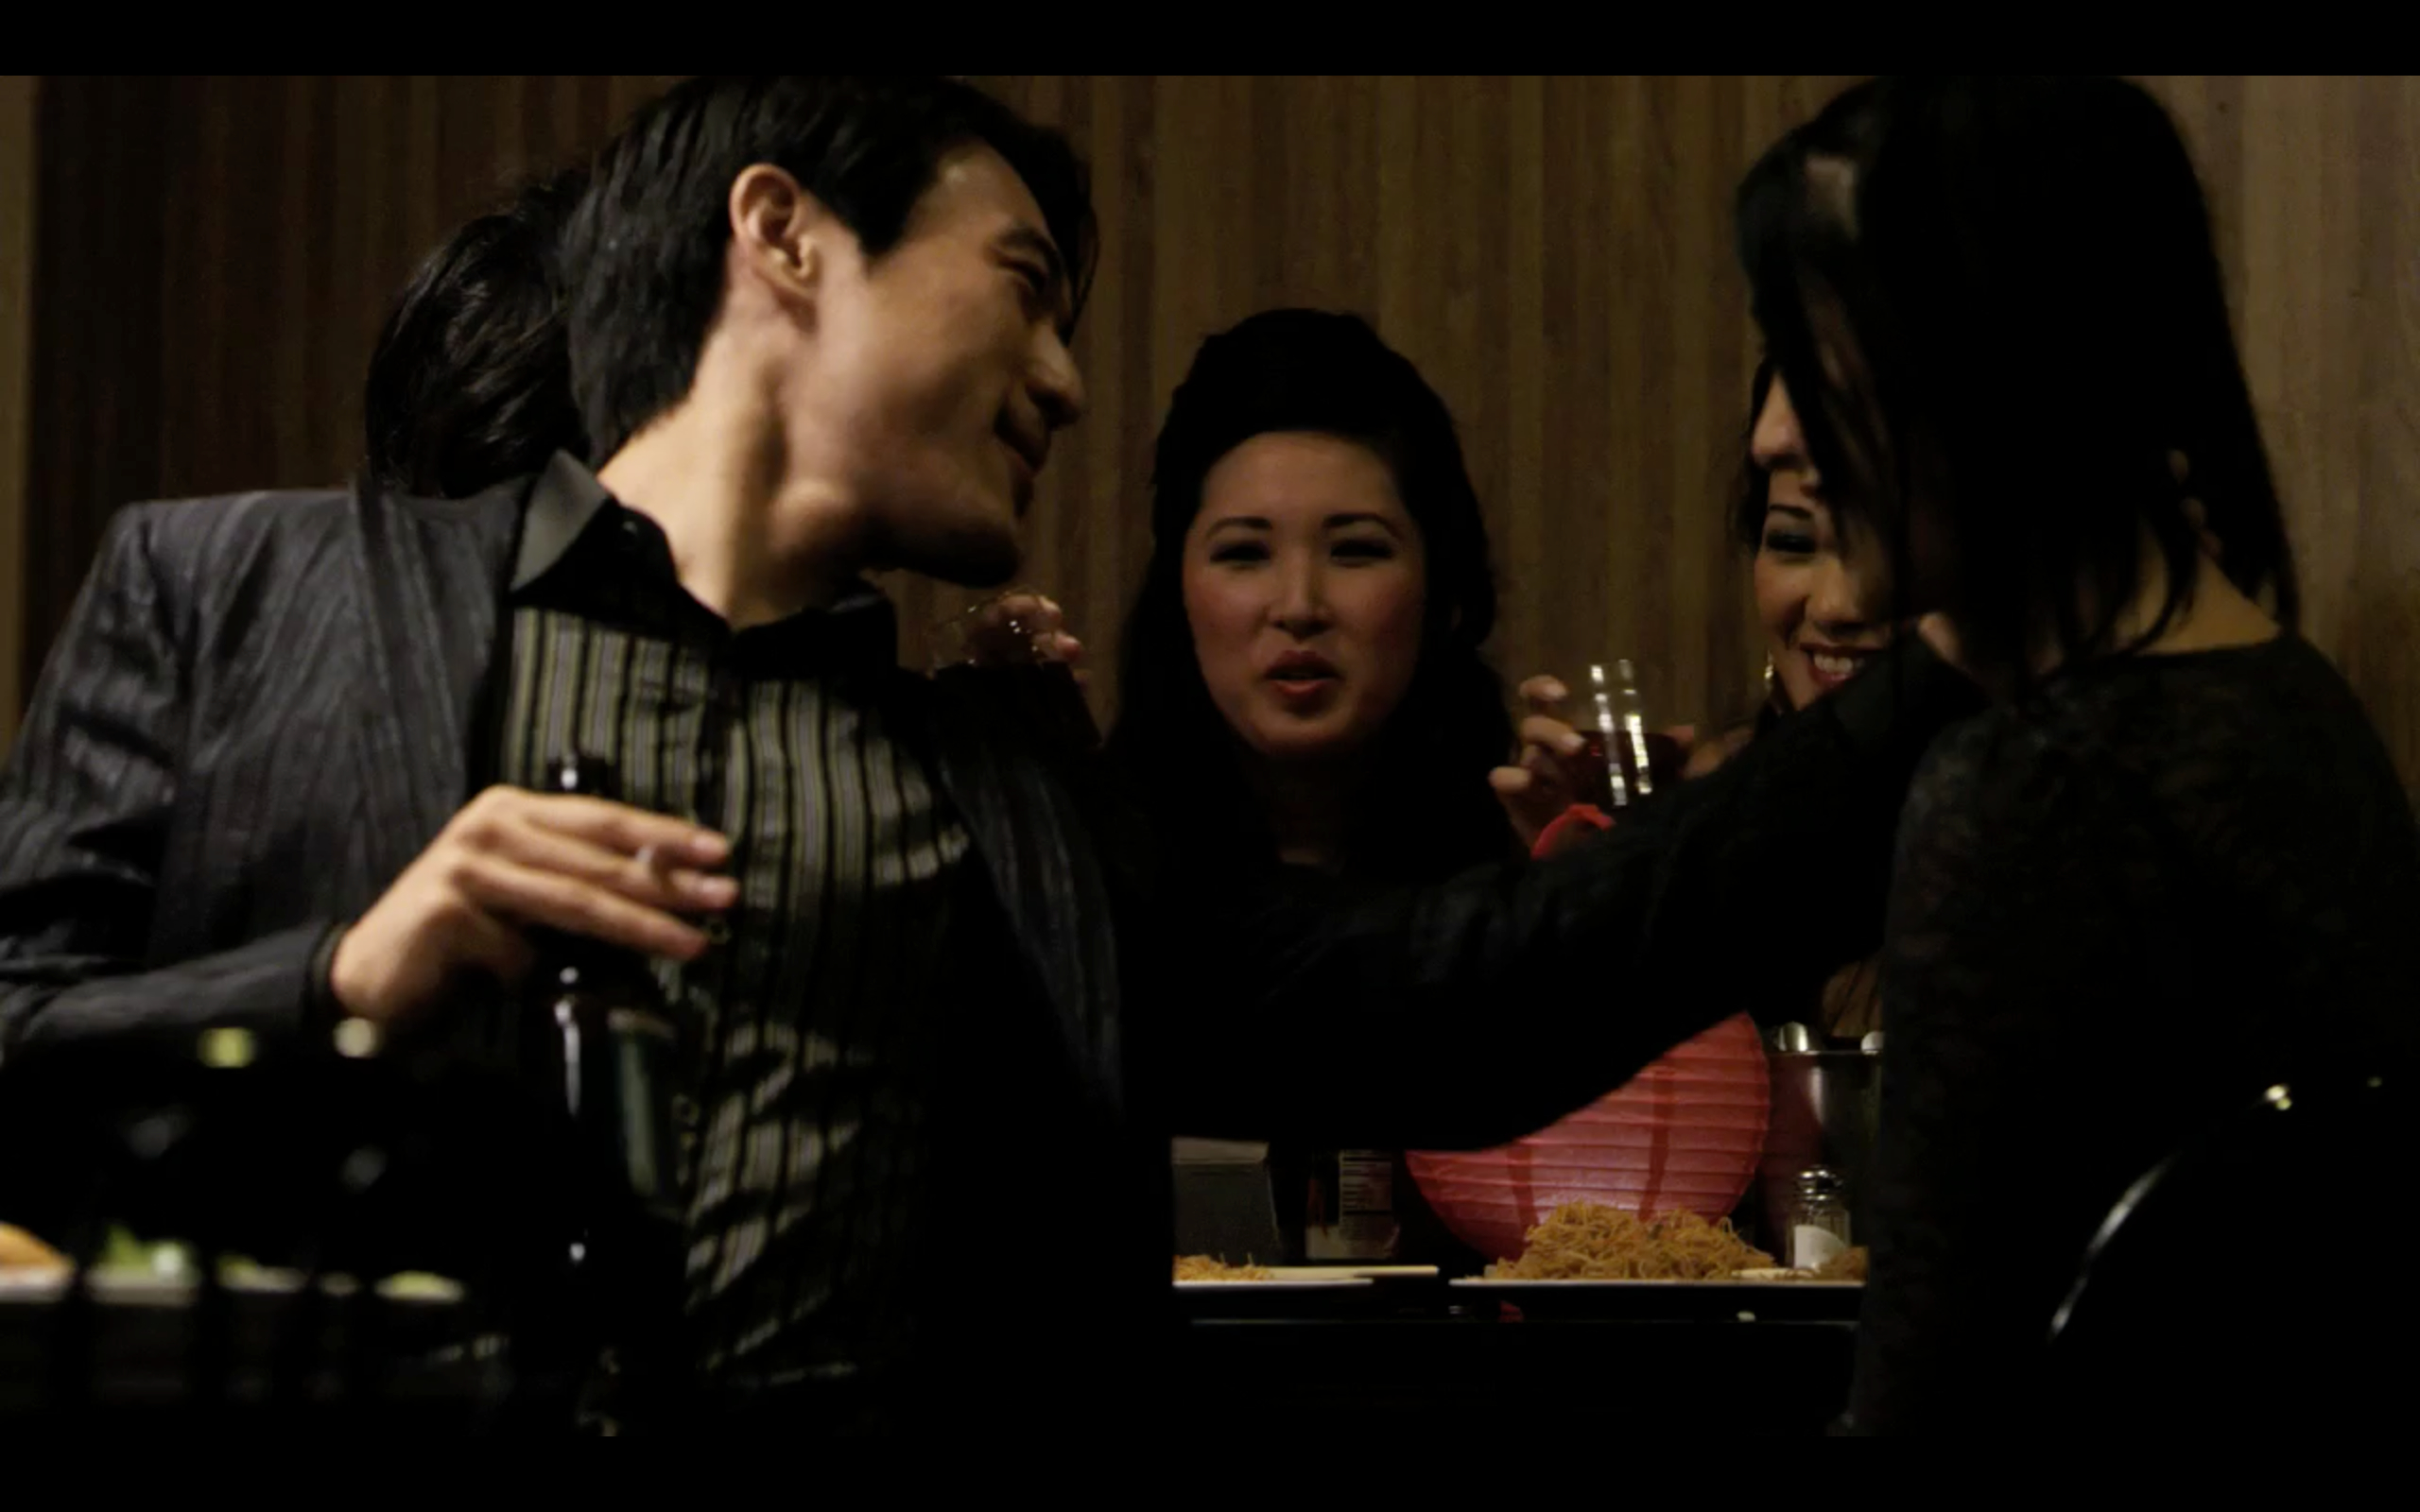 As Nelson Chiu in CBS Blue Bloods, 'Chinatown' episode.http://www.cbs.com/shows/blue_bloods/